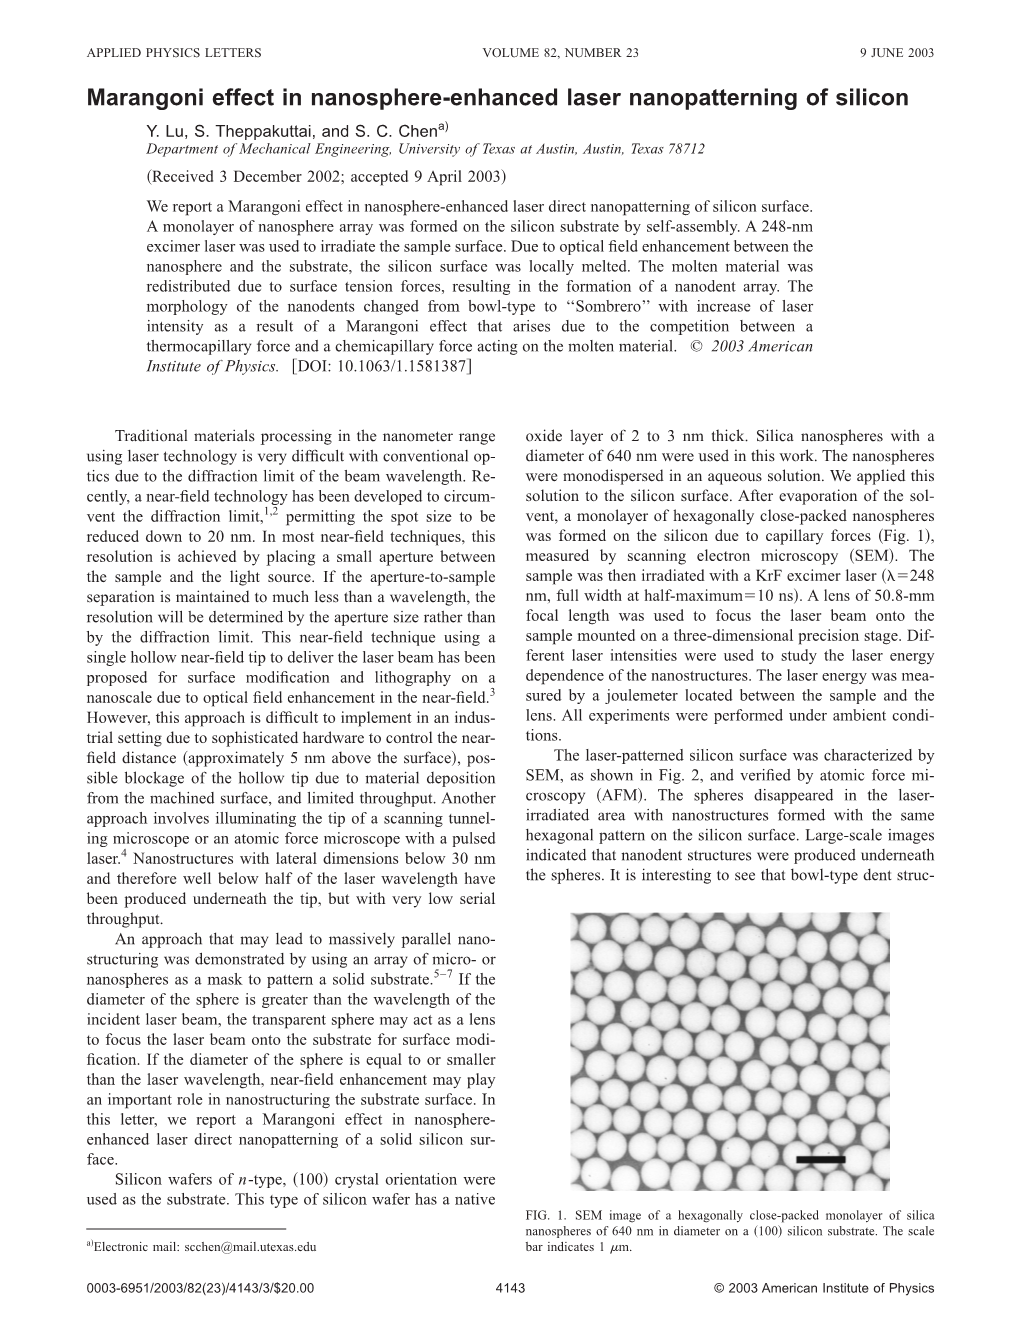 Marangoni Effect in Nanosphere-Enhanced Laser Nanopatterning of Silicon Y